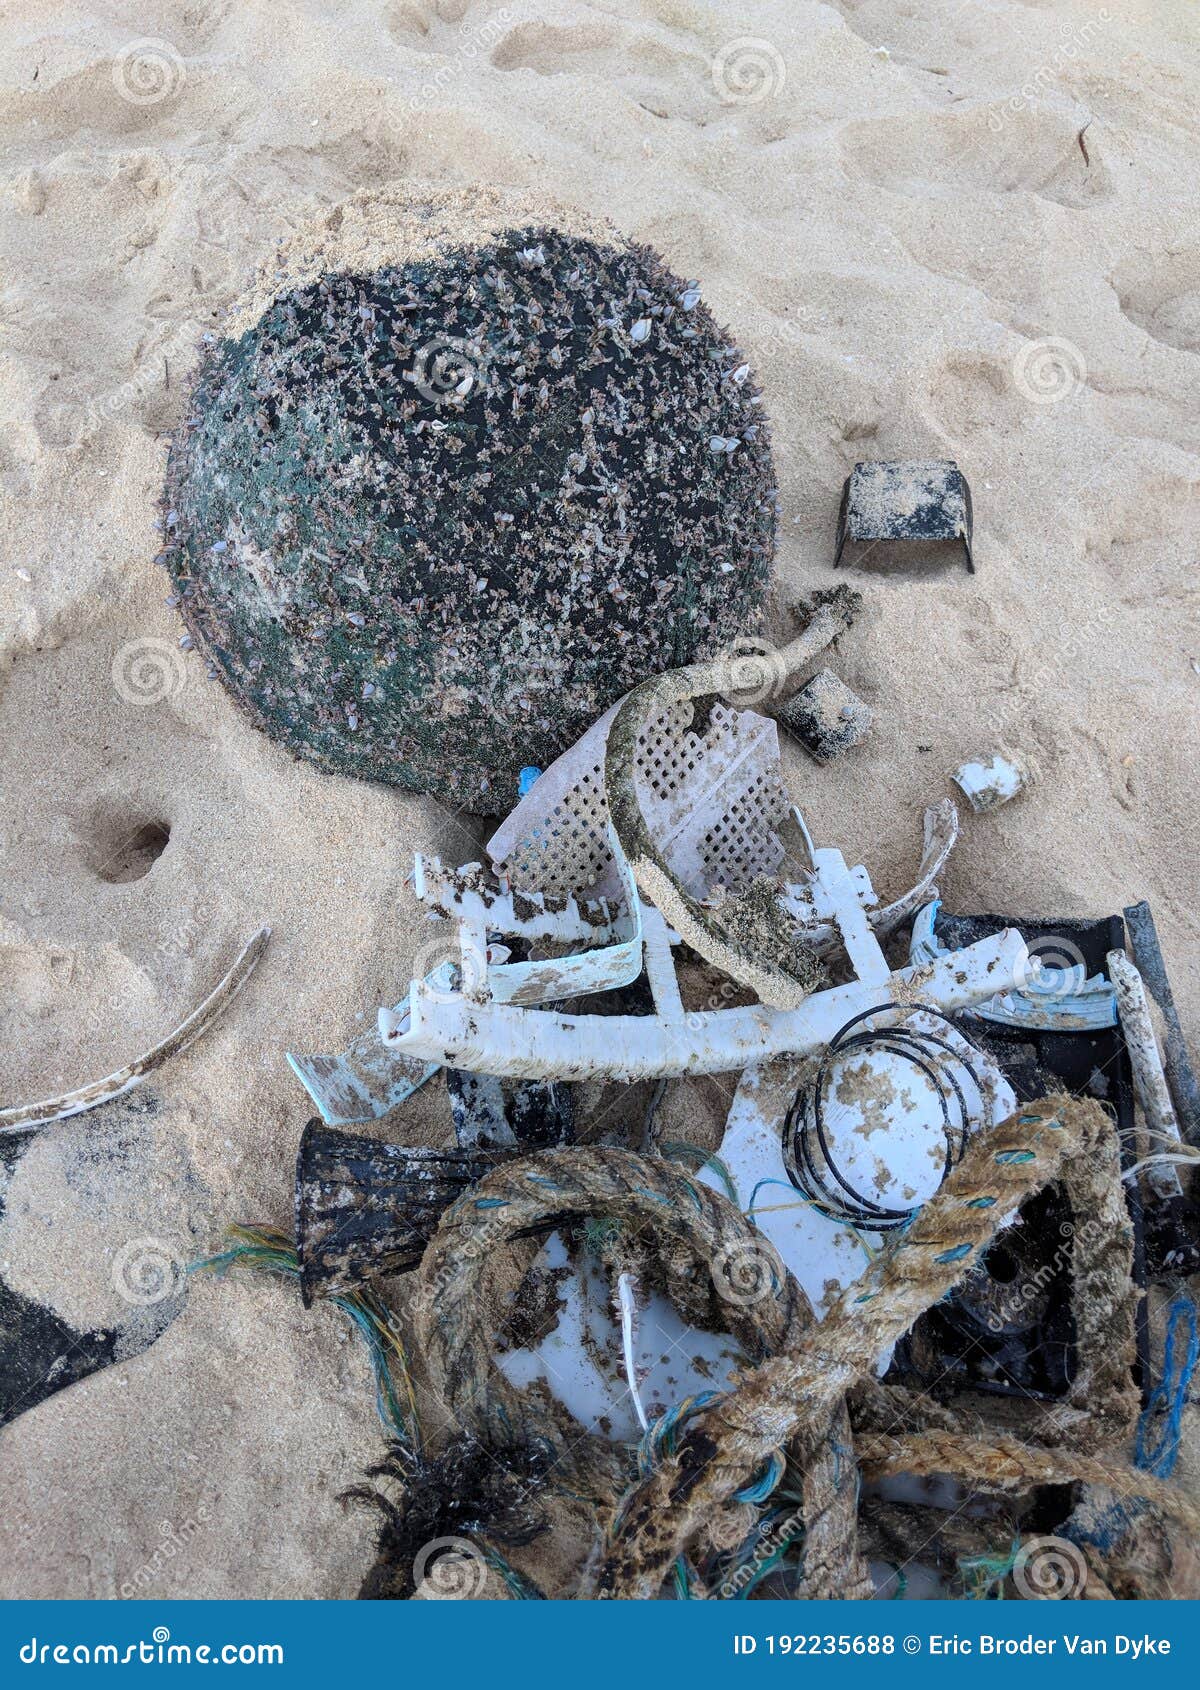 https://thumbs.dreamstime.com/z/bundle-plastic-buoy-fishing-nets-lines-other-trash-washes-up-beach-oahu-hawaii-192235688.jpg